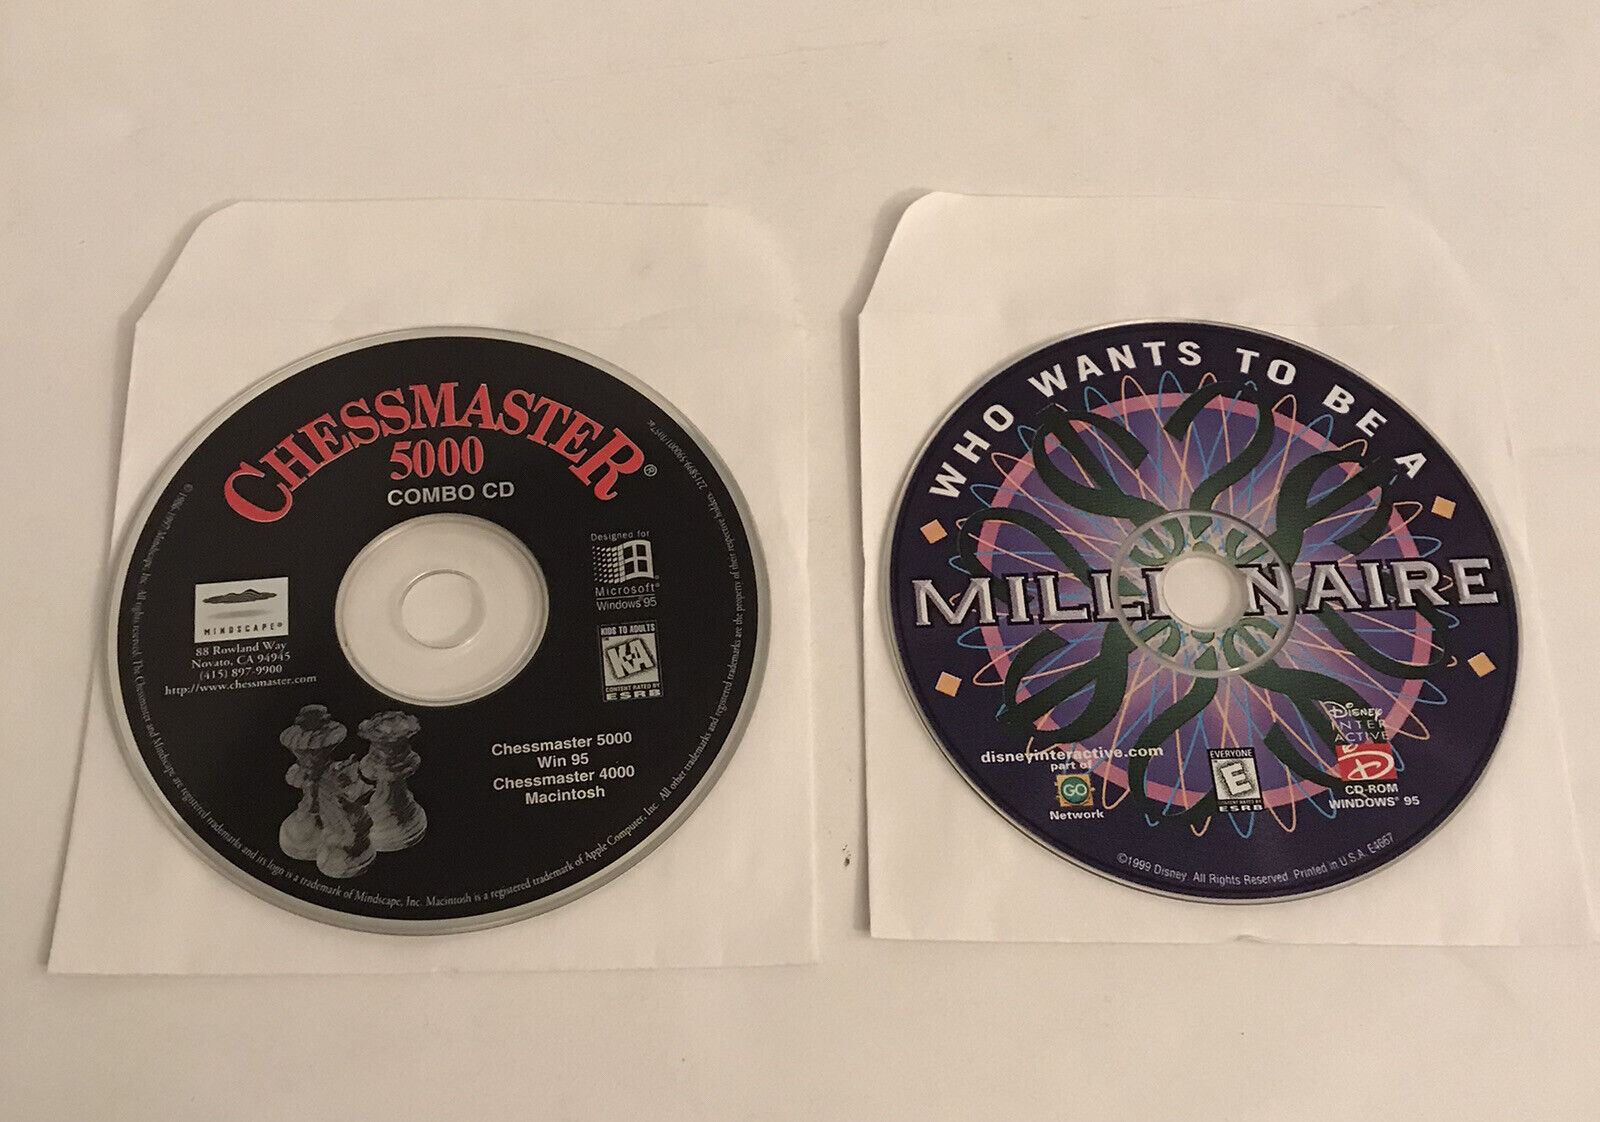 Lot Of 2 PC Games Windows 95 CD-ROM Inc: Chessmaster 5000 & Millionaire